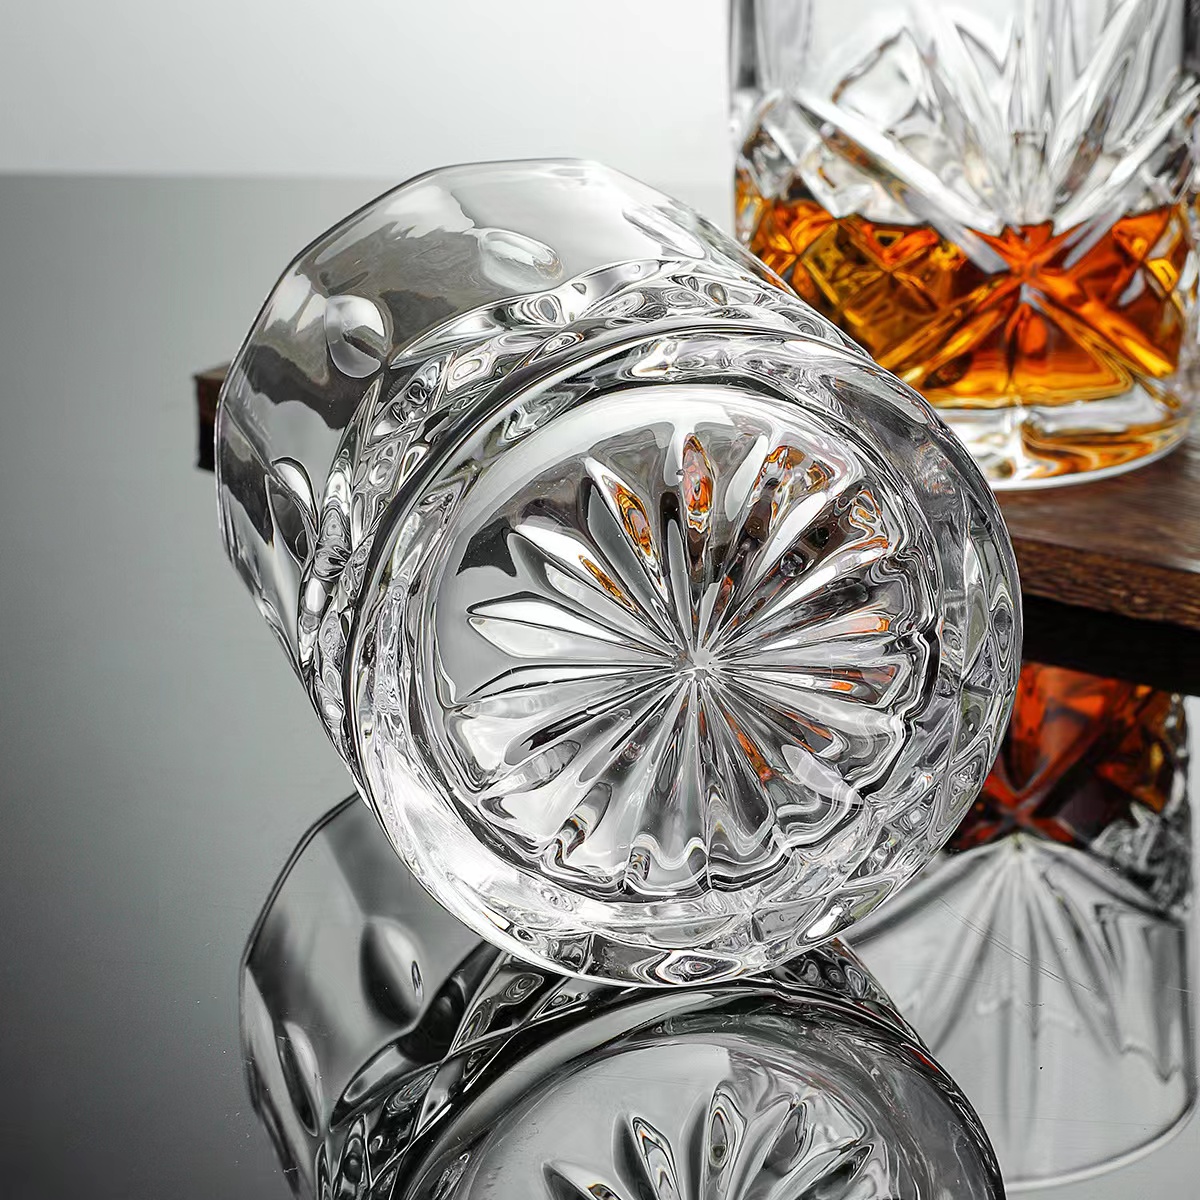 Gammeldags whiskyglass for Scotch, Bourbon, Liquor04 - 副本